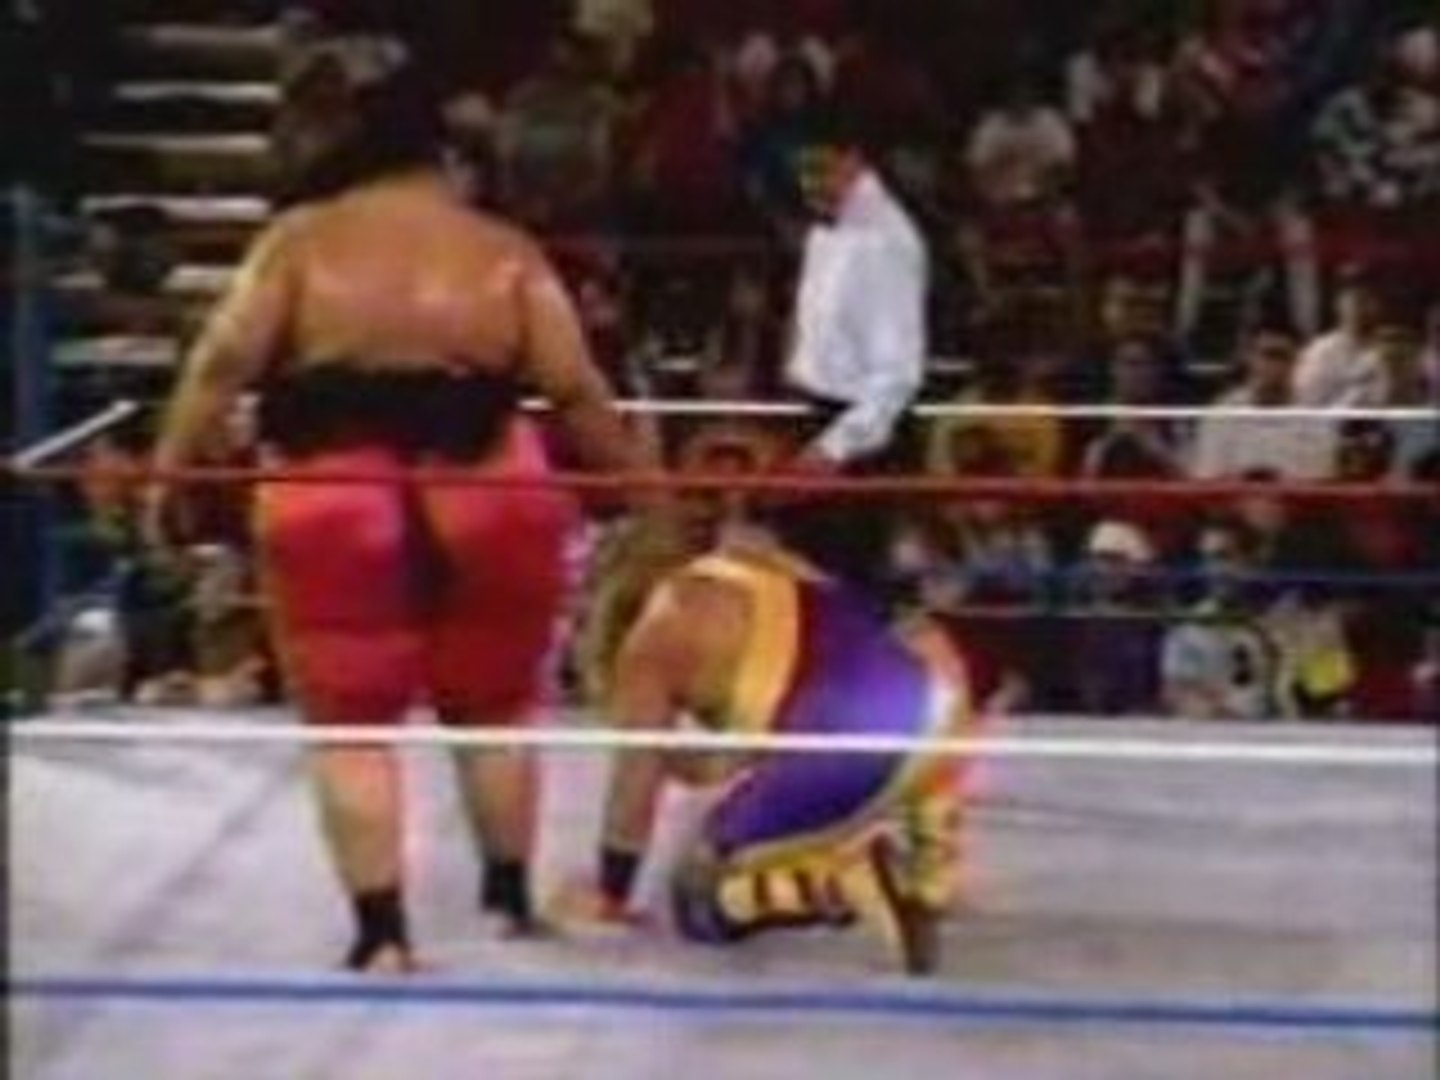 Luta Livre Americana (RTP1): Yokozuna vs Dan Dubiel [WWF Monday